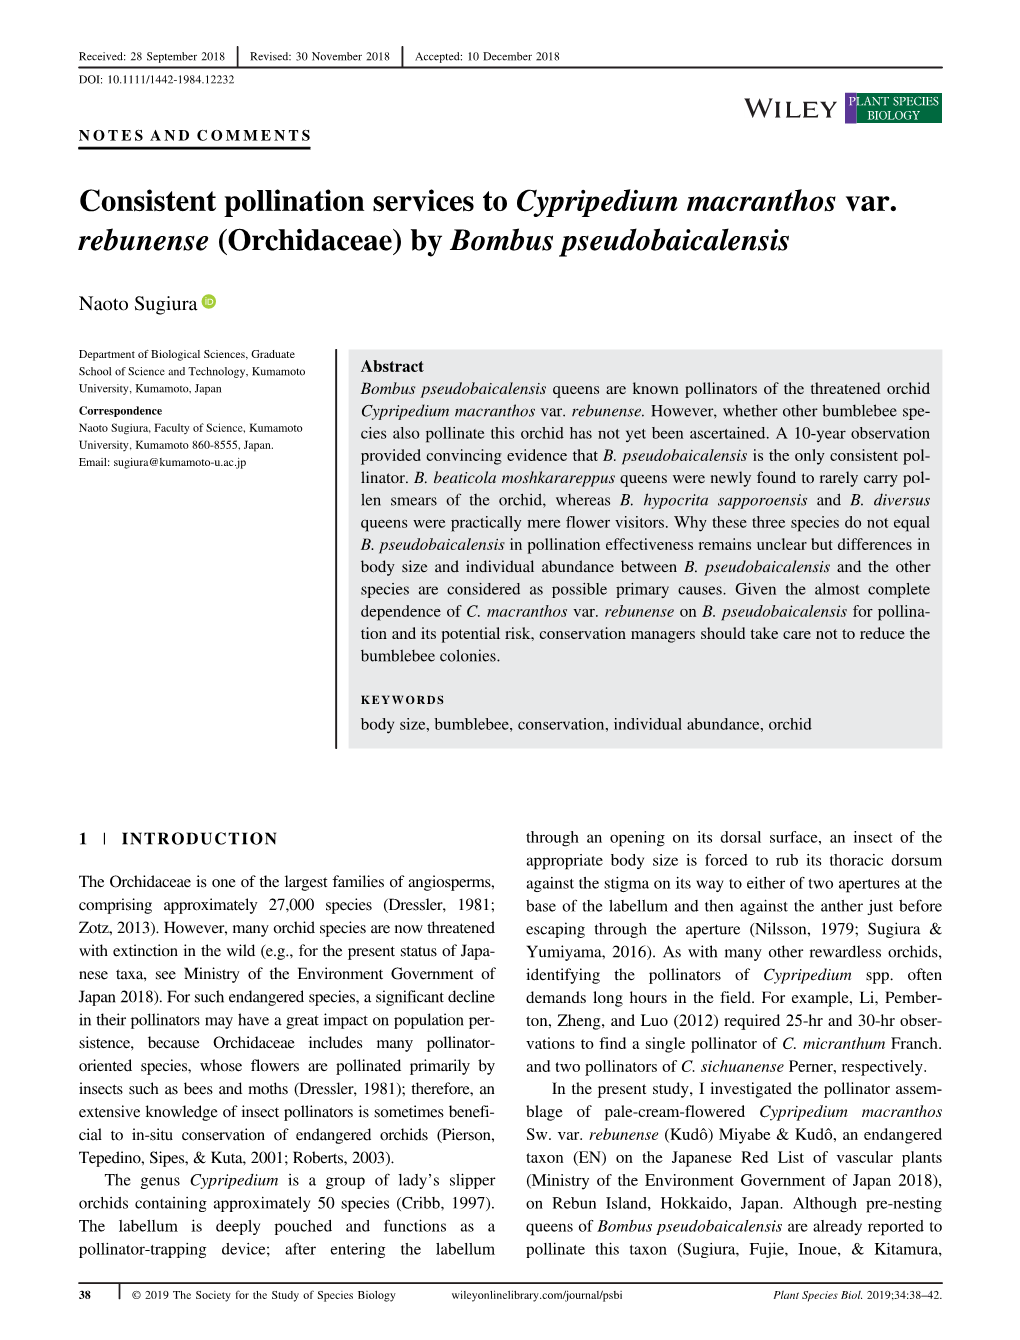 Consistent Pollination Services to Cypripedium Macranthos Var. Rebunense (Orchidaceae) by Bombus Pseudobaicalensis